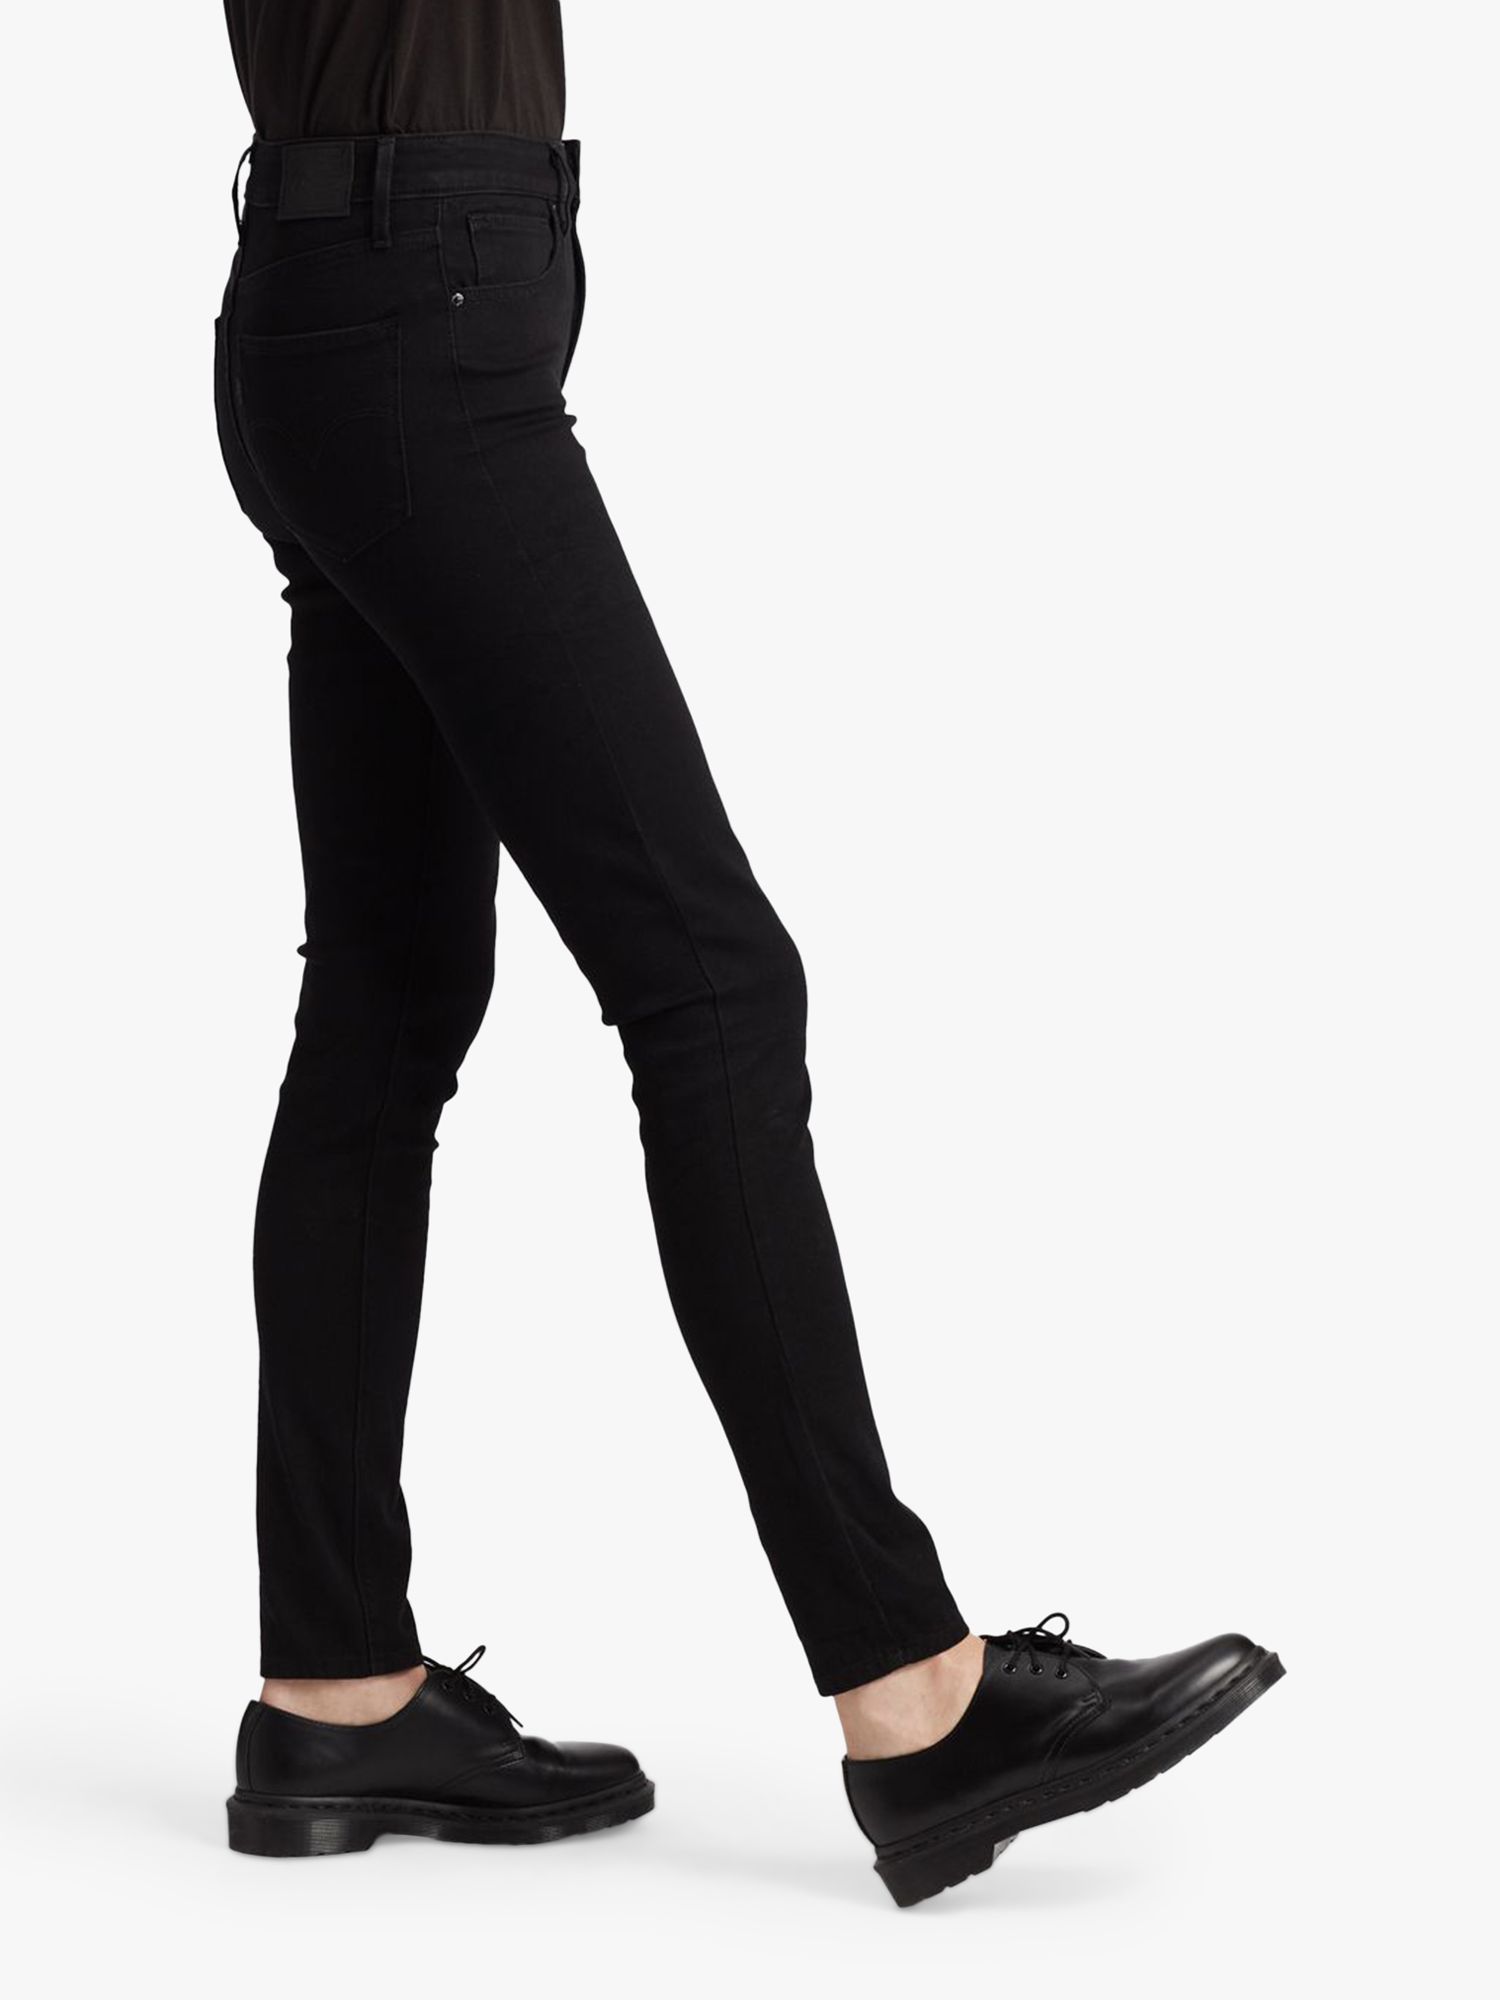 Levi's 721 High Rise Skinny Jeans, Long Shot Black, W24/L28